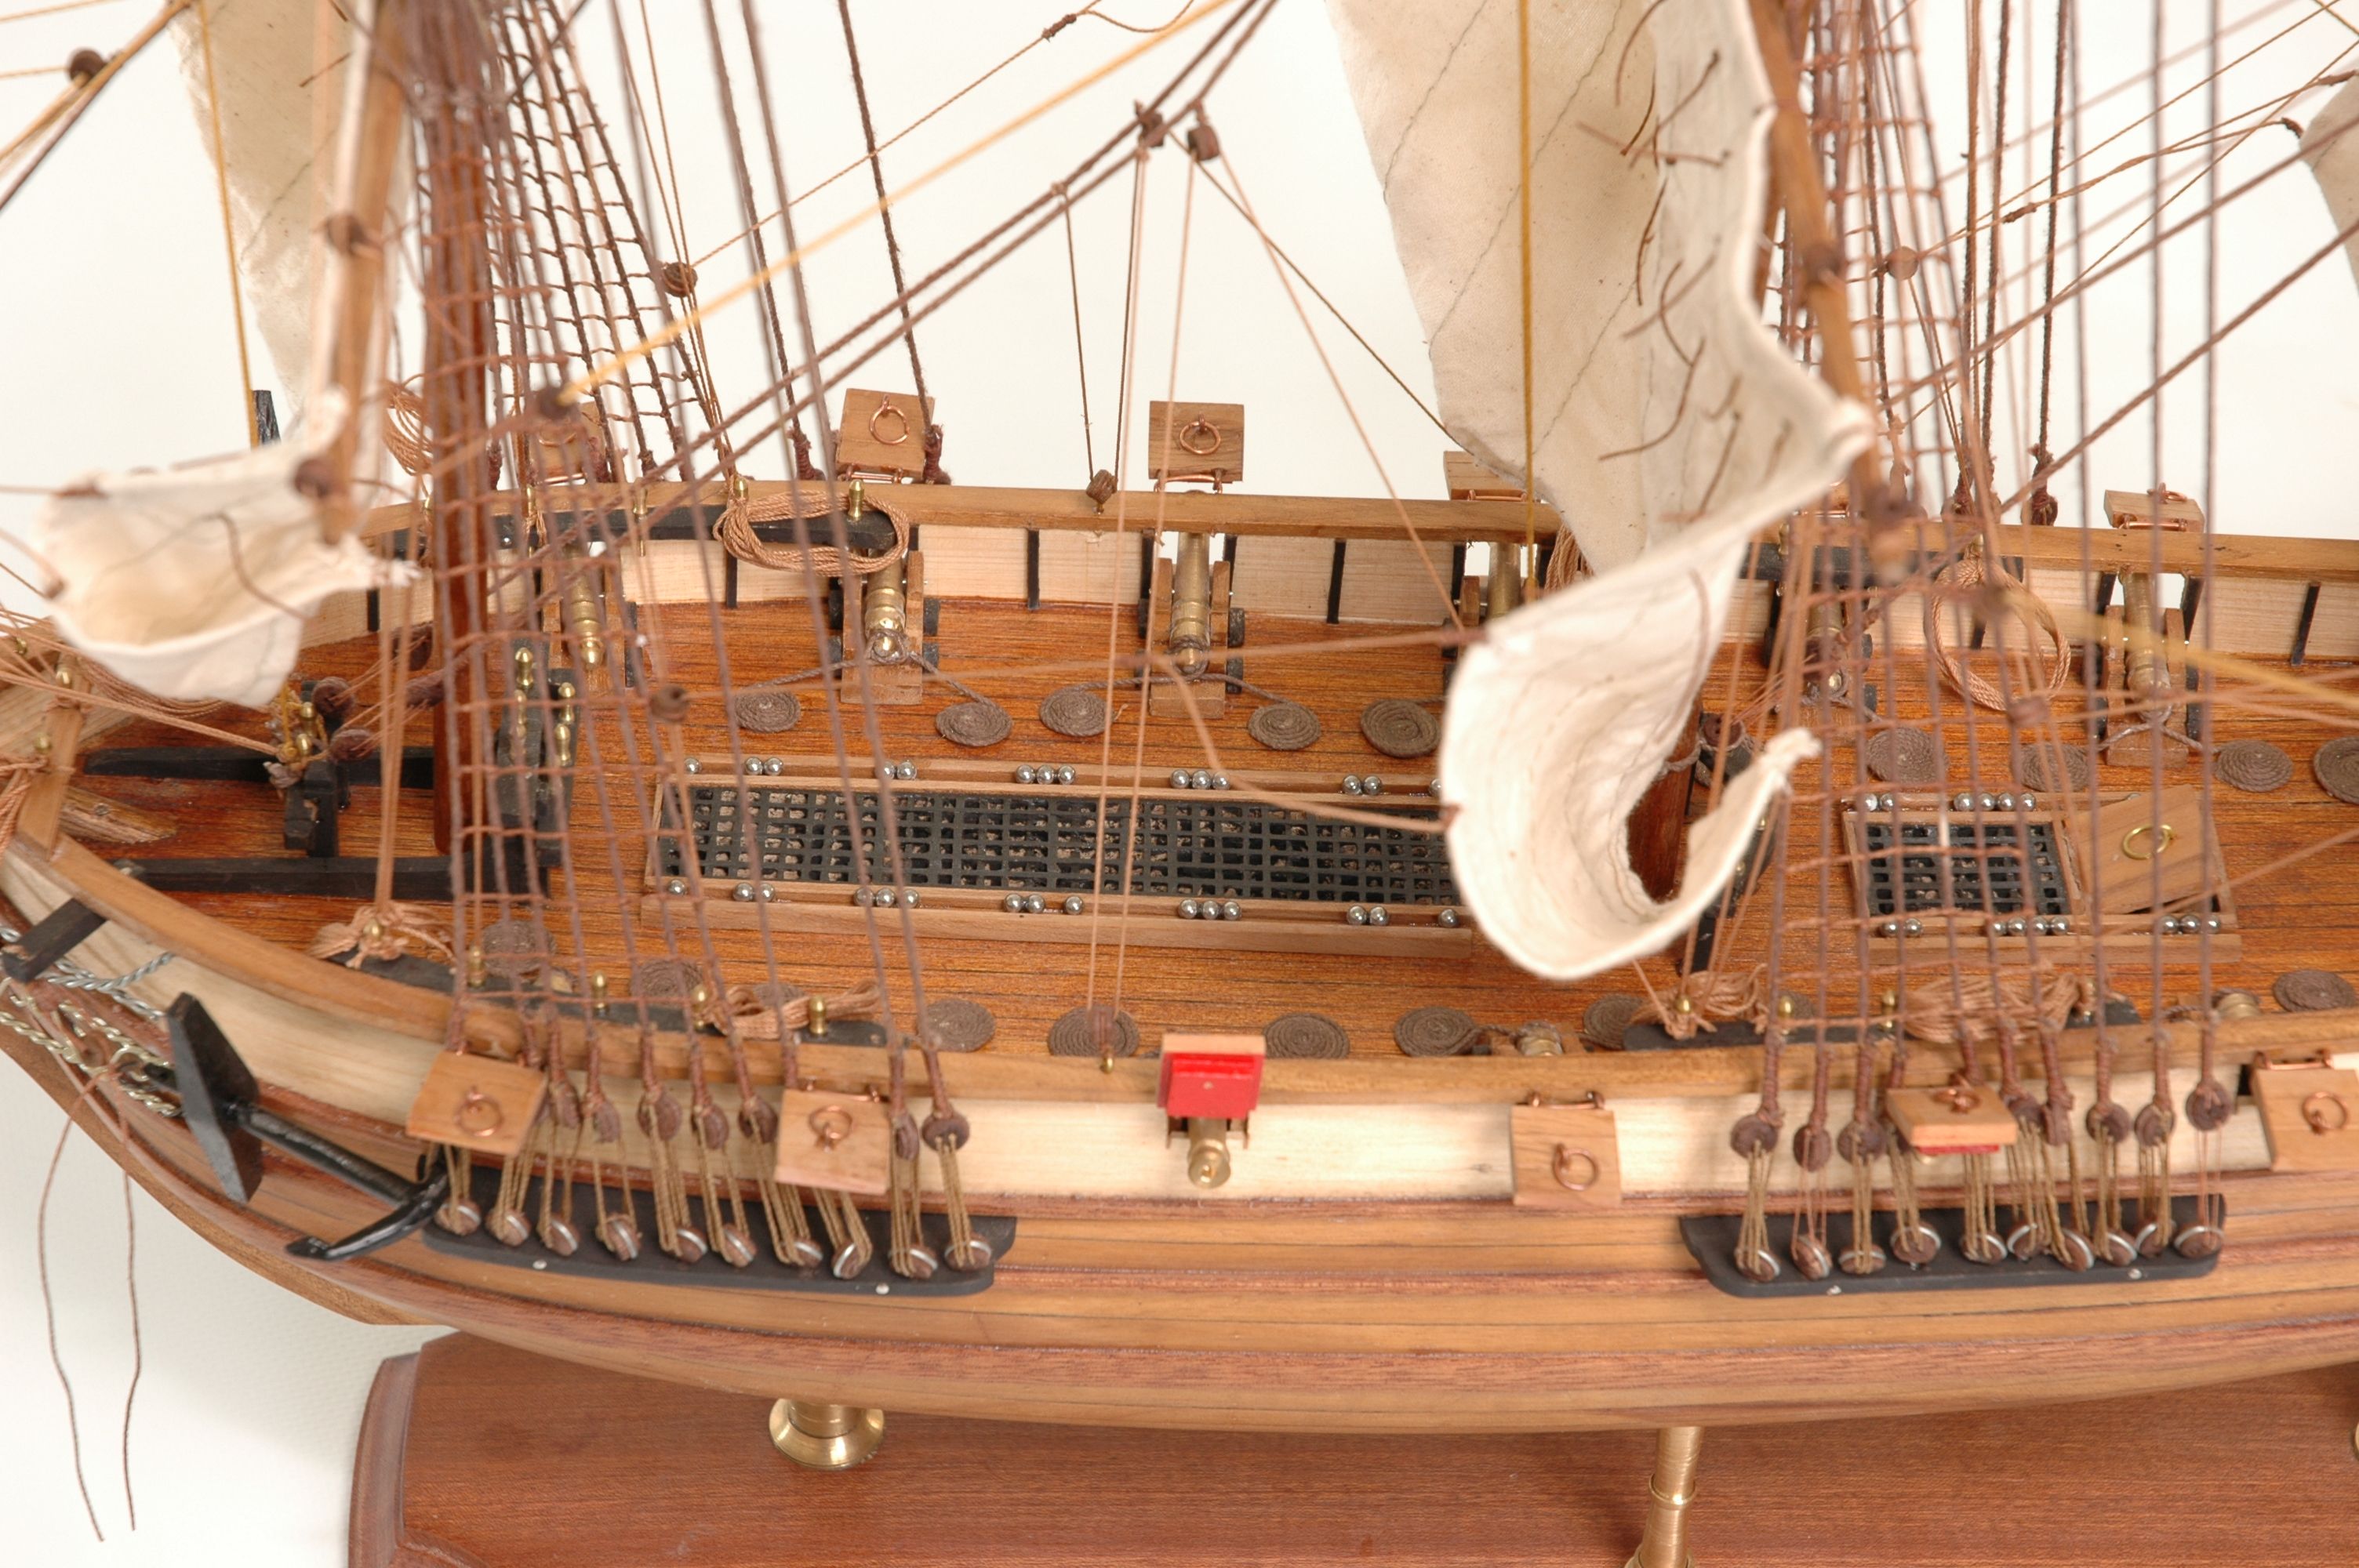 Astrolabe Model Ship (Superior Range) - PSM